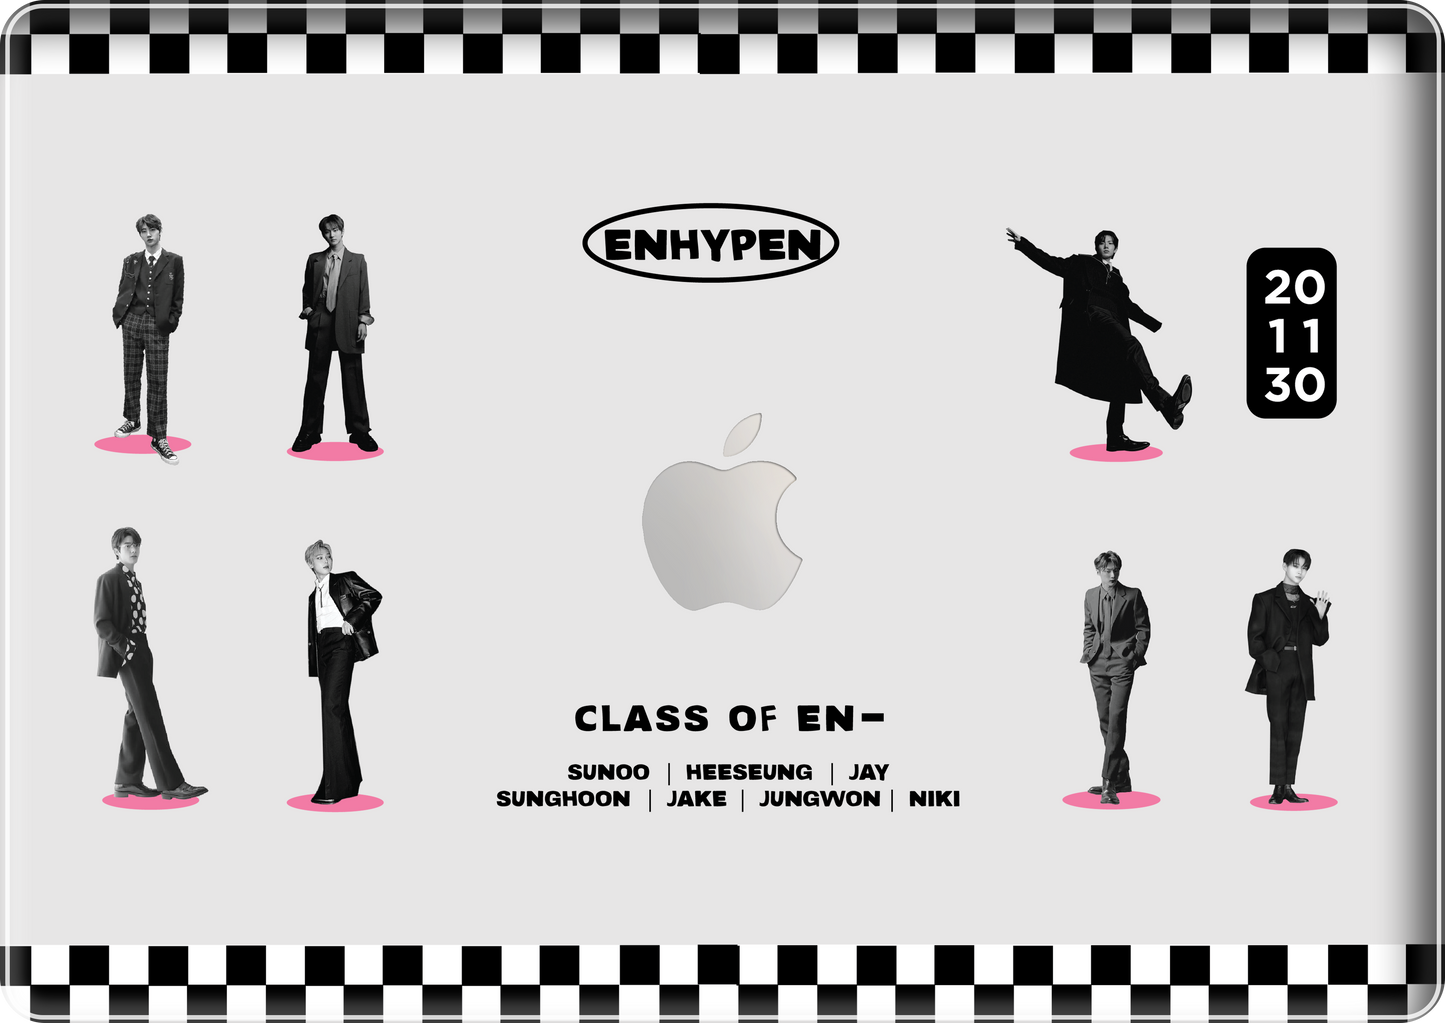 Macbook Snap Case - Enhypen Class of Enhypen